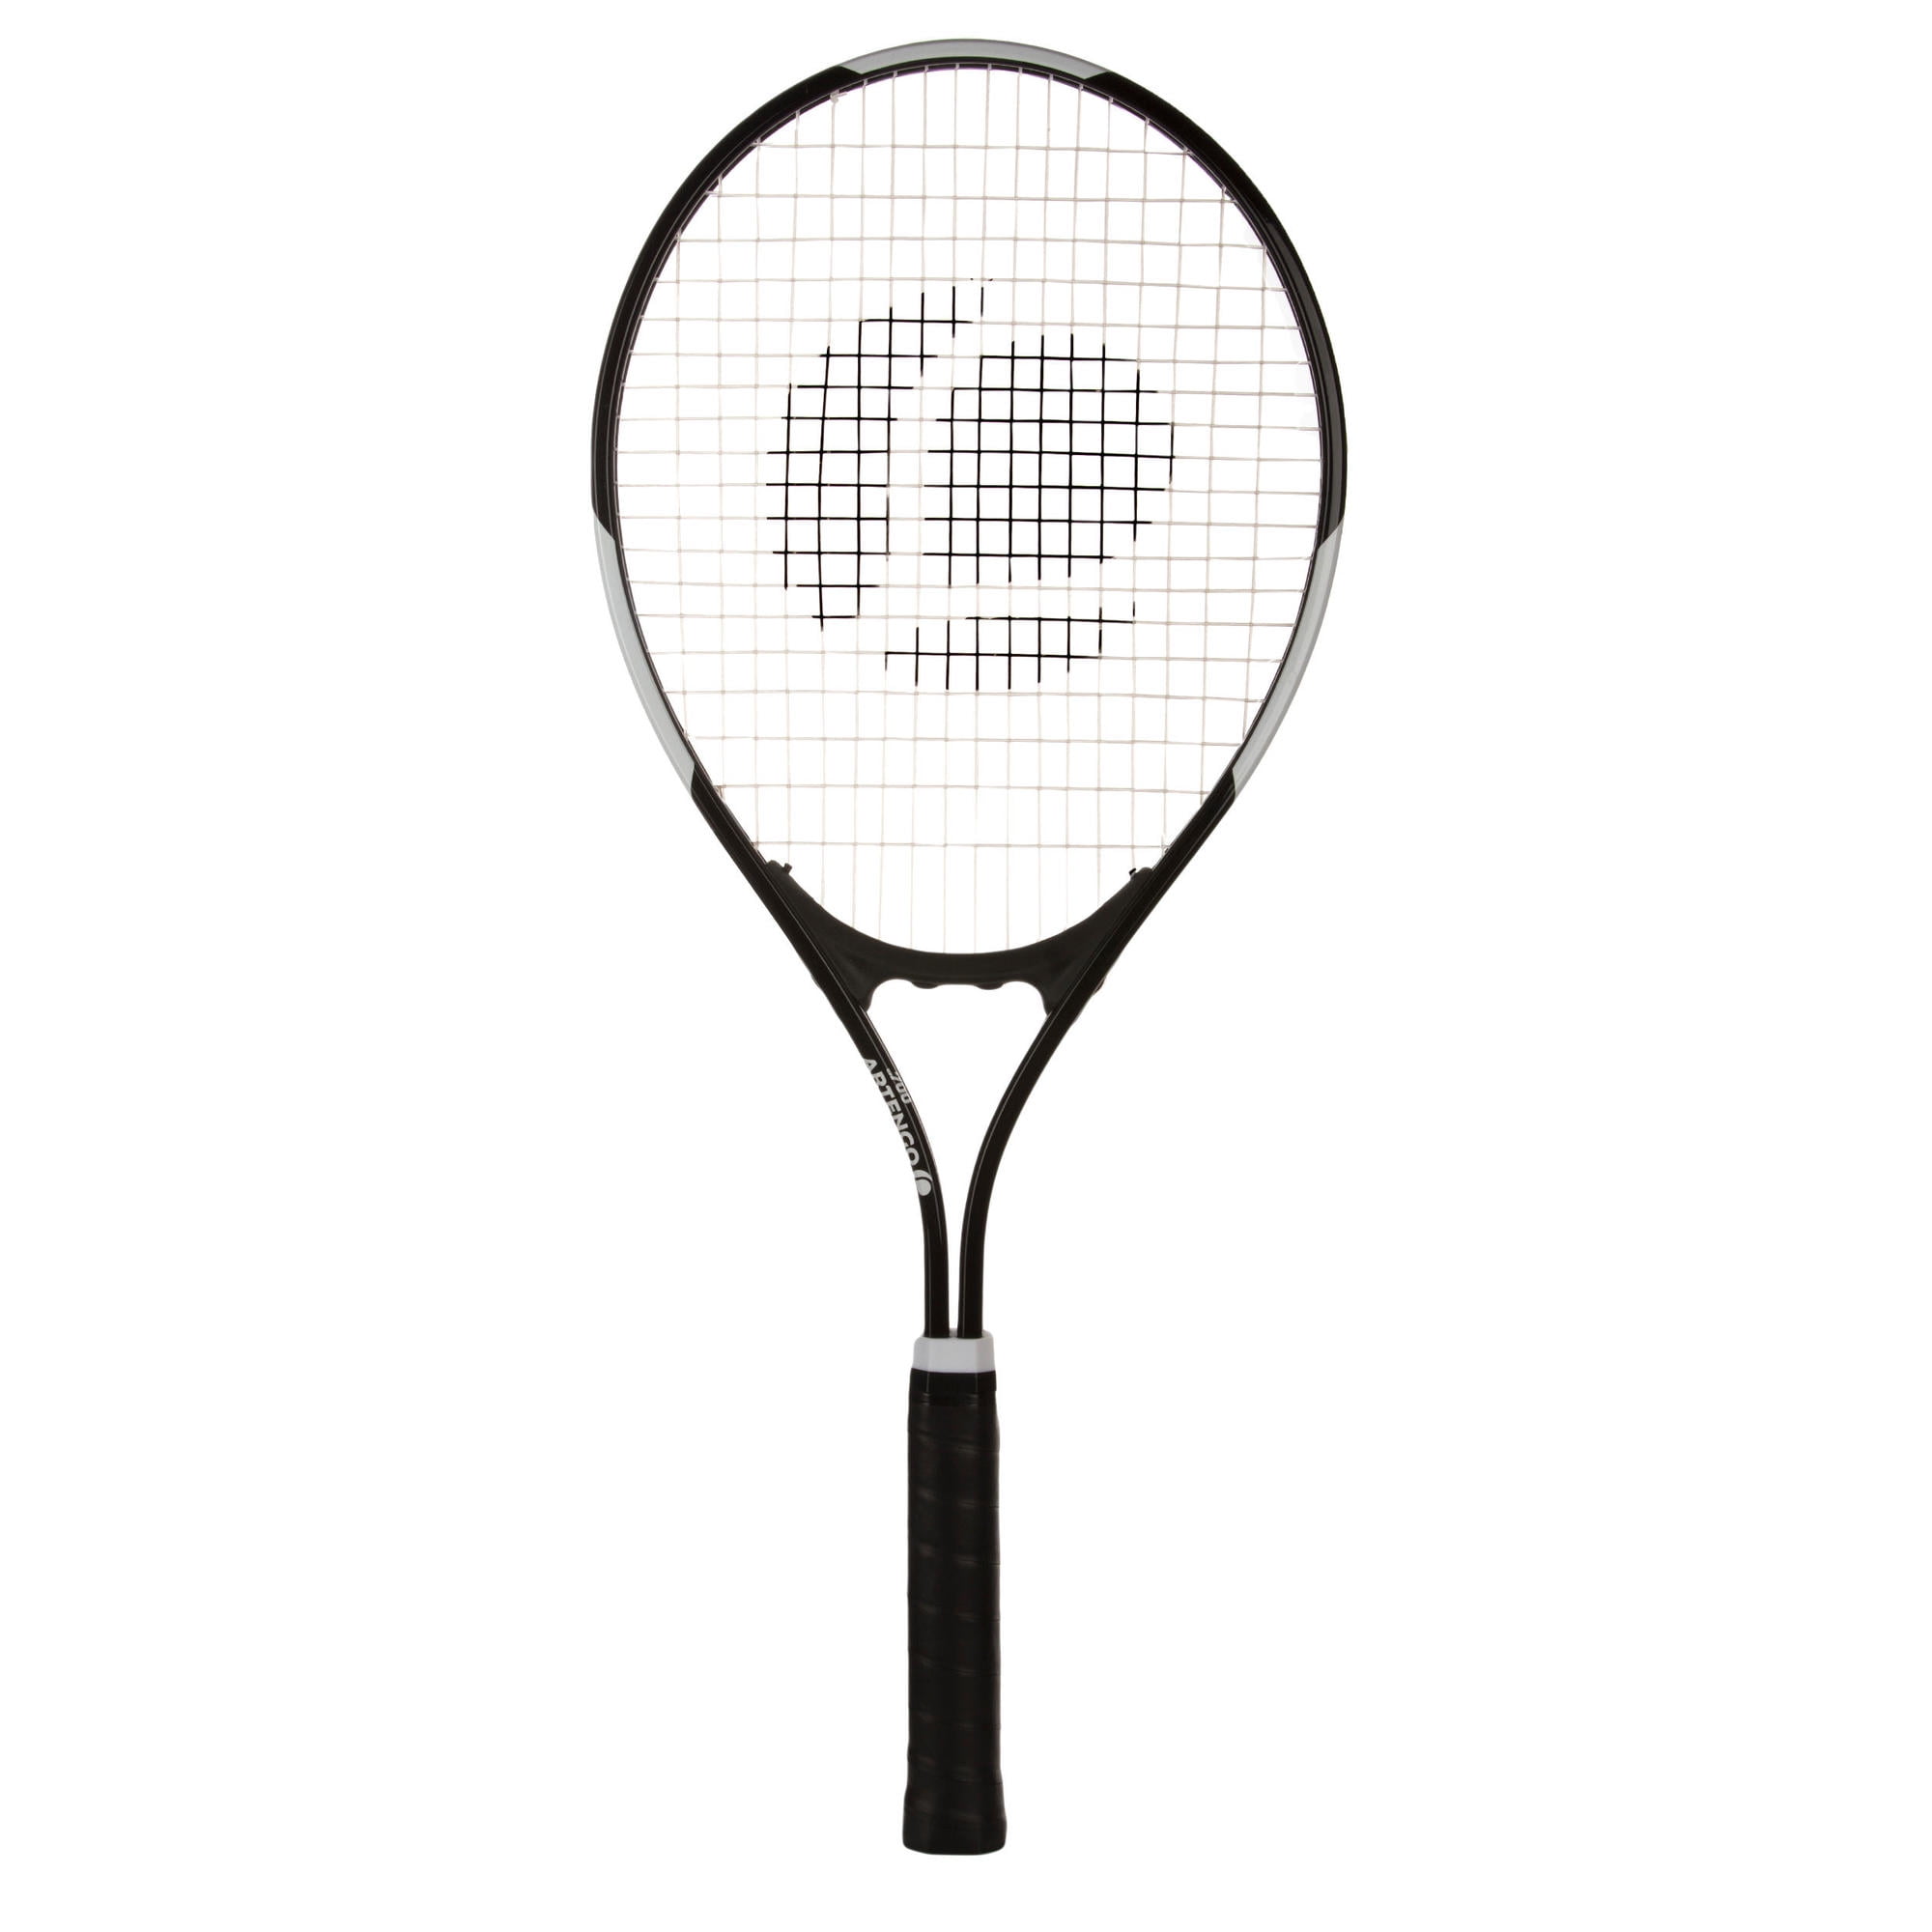 undefined | Decathlon TR100, 27" Tennis Racket, Black, 9.3 oz